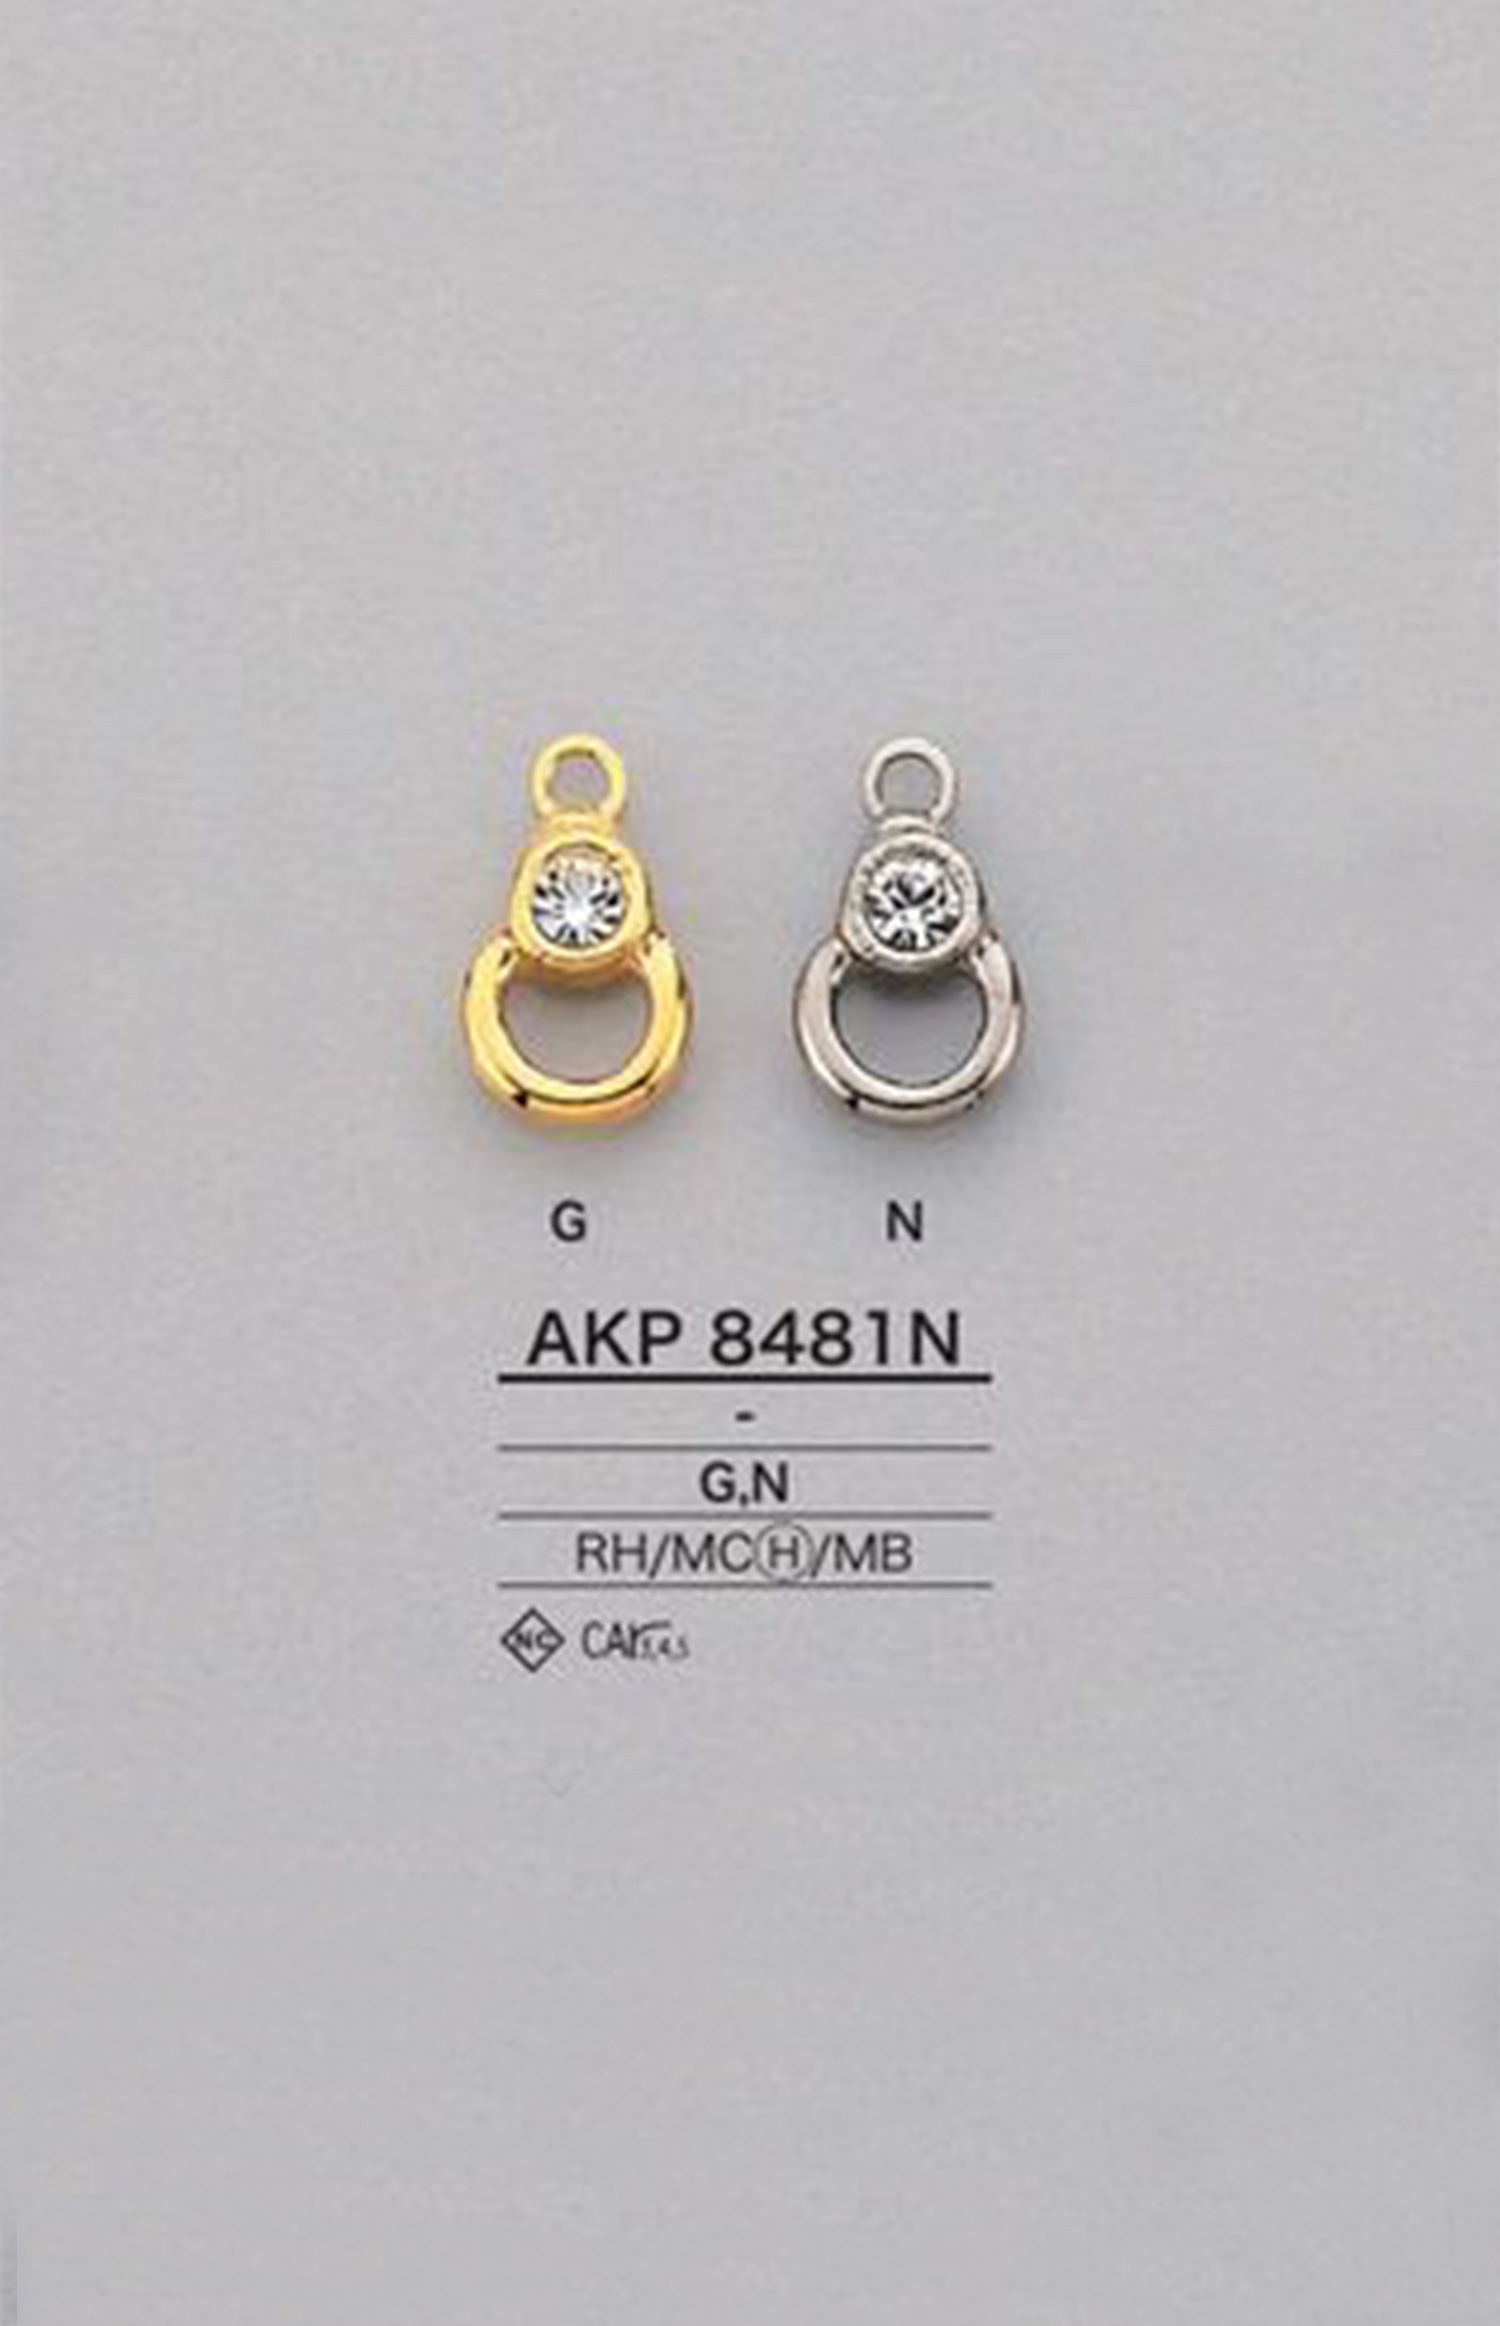 AKP8481N 라인 스톤 지퍼 포인트 (지퍼 슬라이더) IRIS